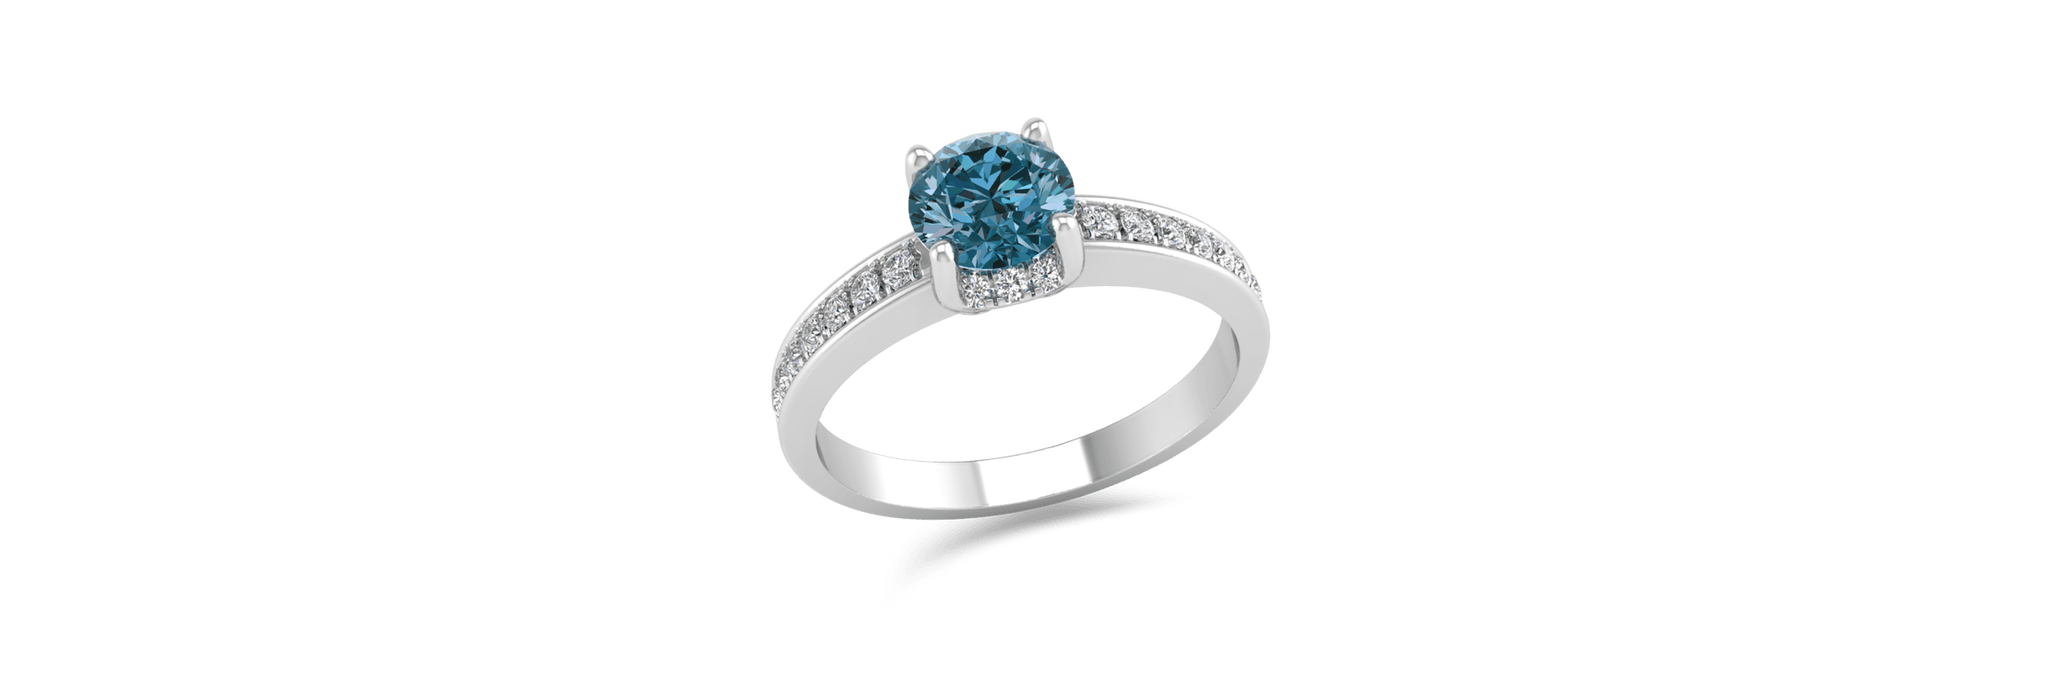 Inel de logodna din aur alb de 18K cu diamant albastru de 0.33ct si diamante de 0.16ct